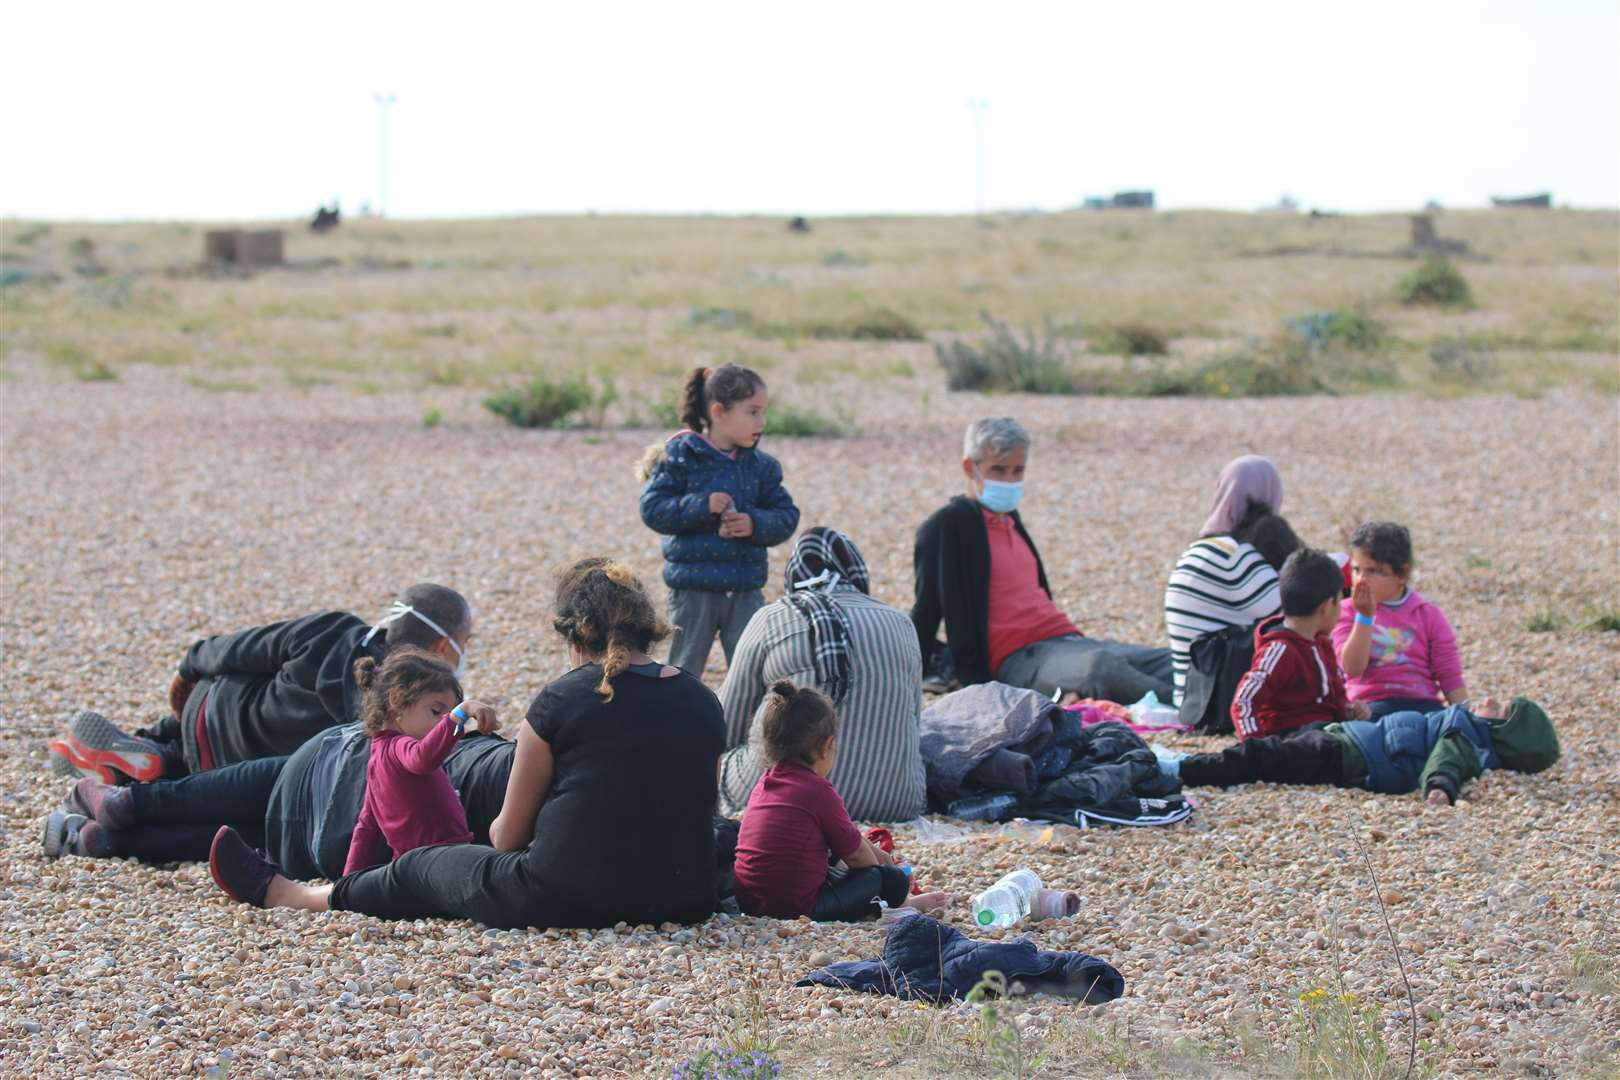 People seeking asylum landing at Dungeness, including children. Picture: Susan Pilcher